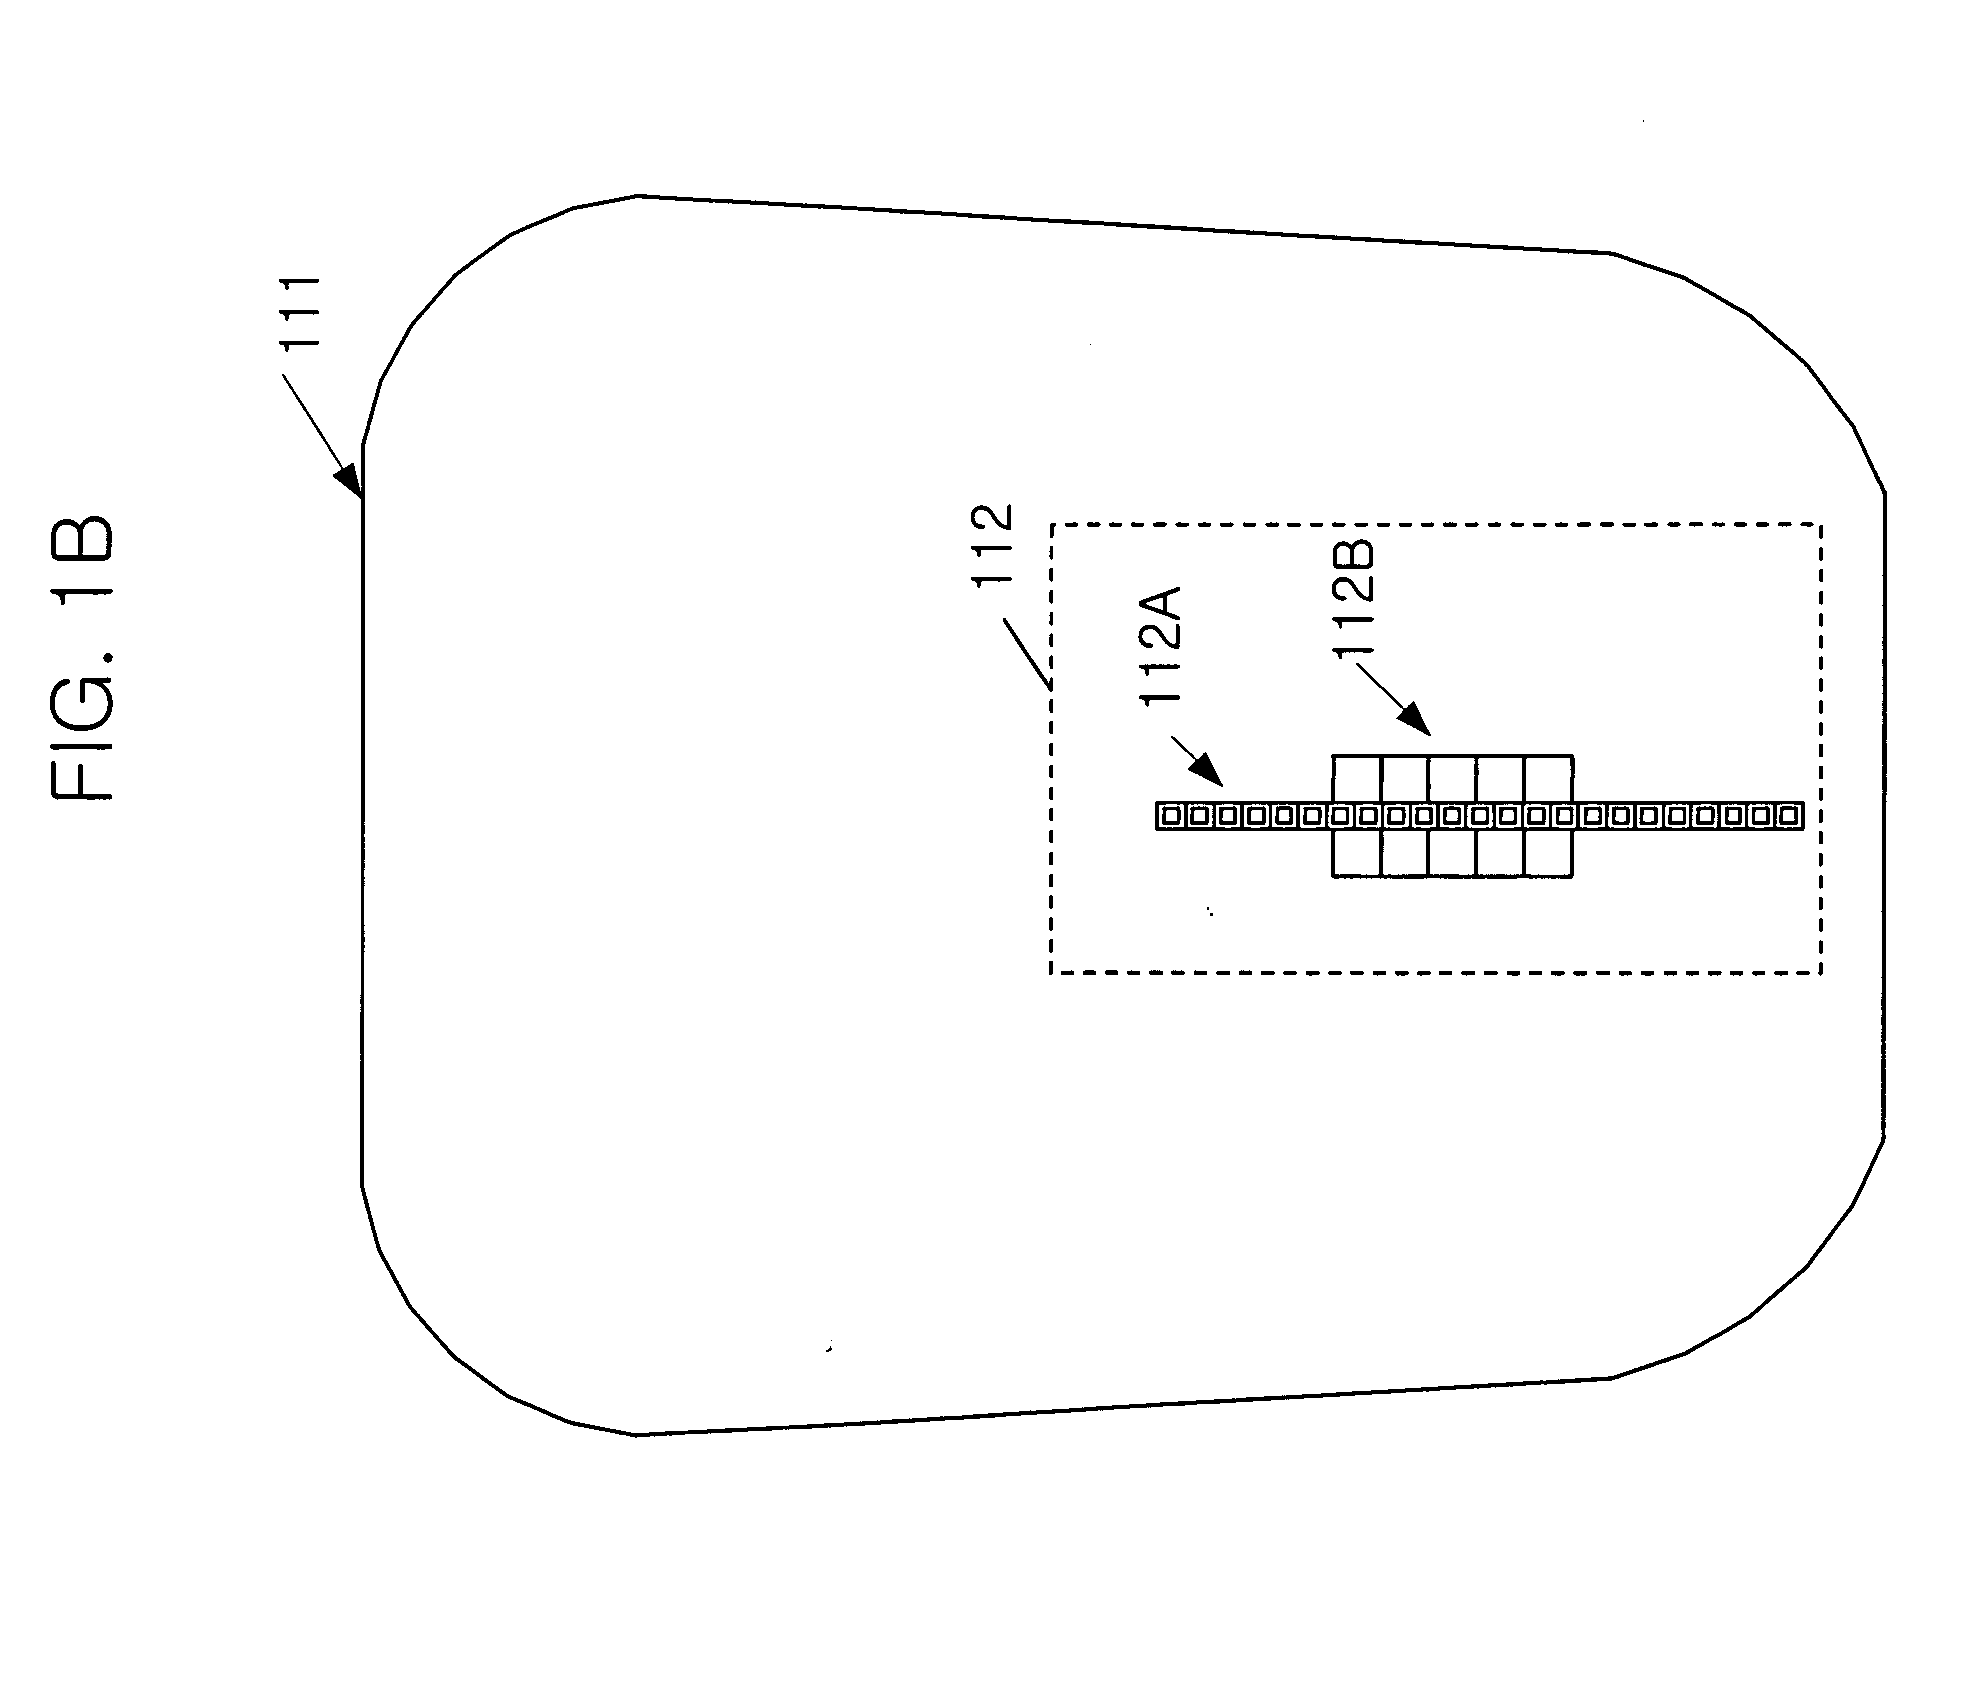 Triple-band offset hybrid antenna using shaped reflector